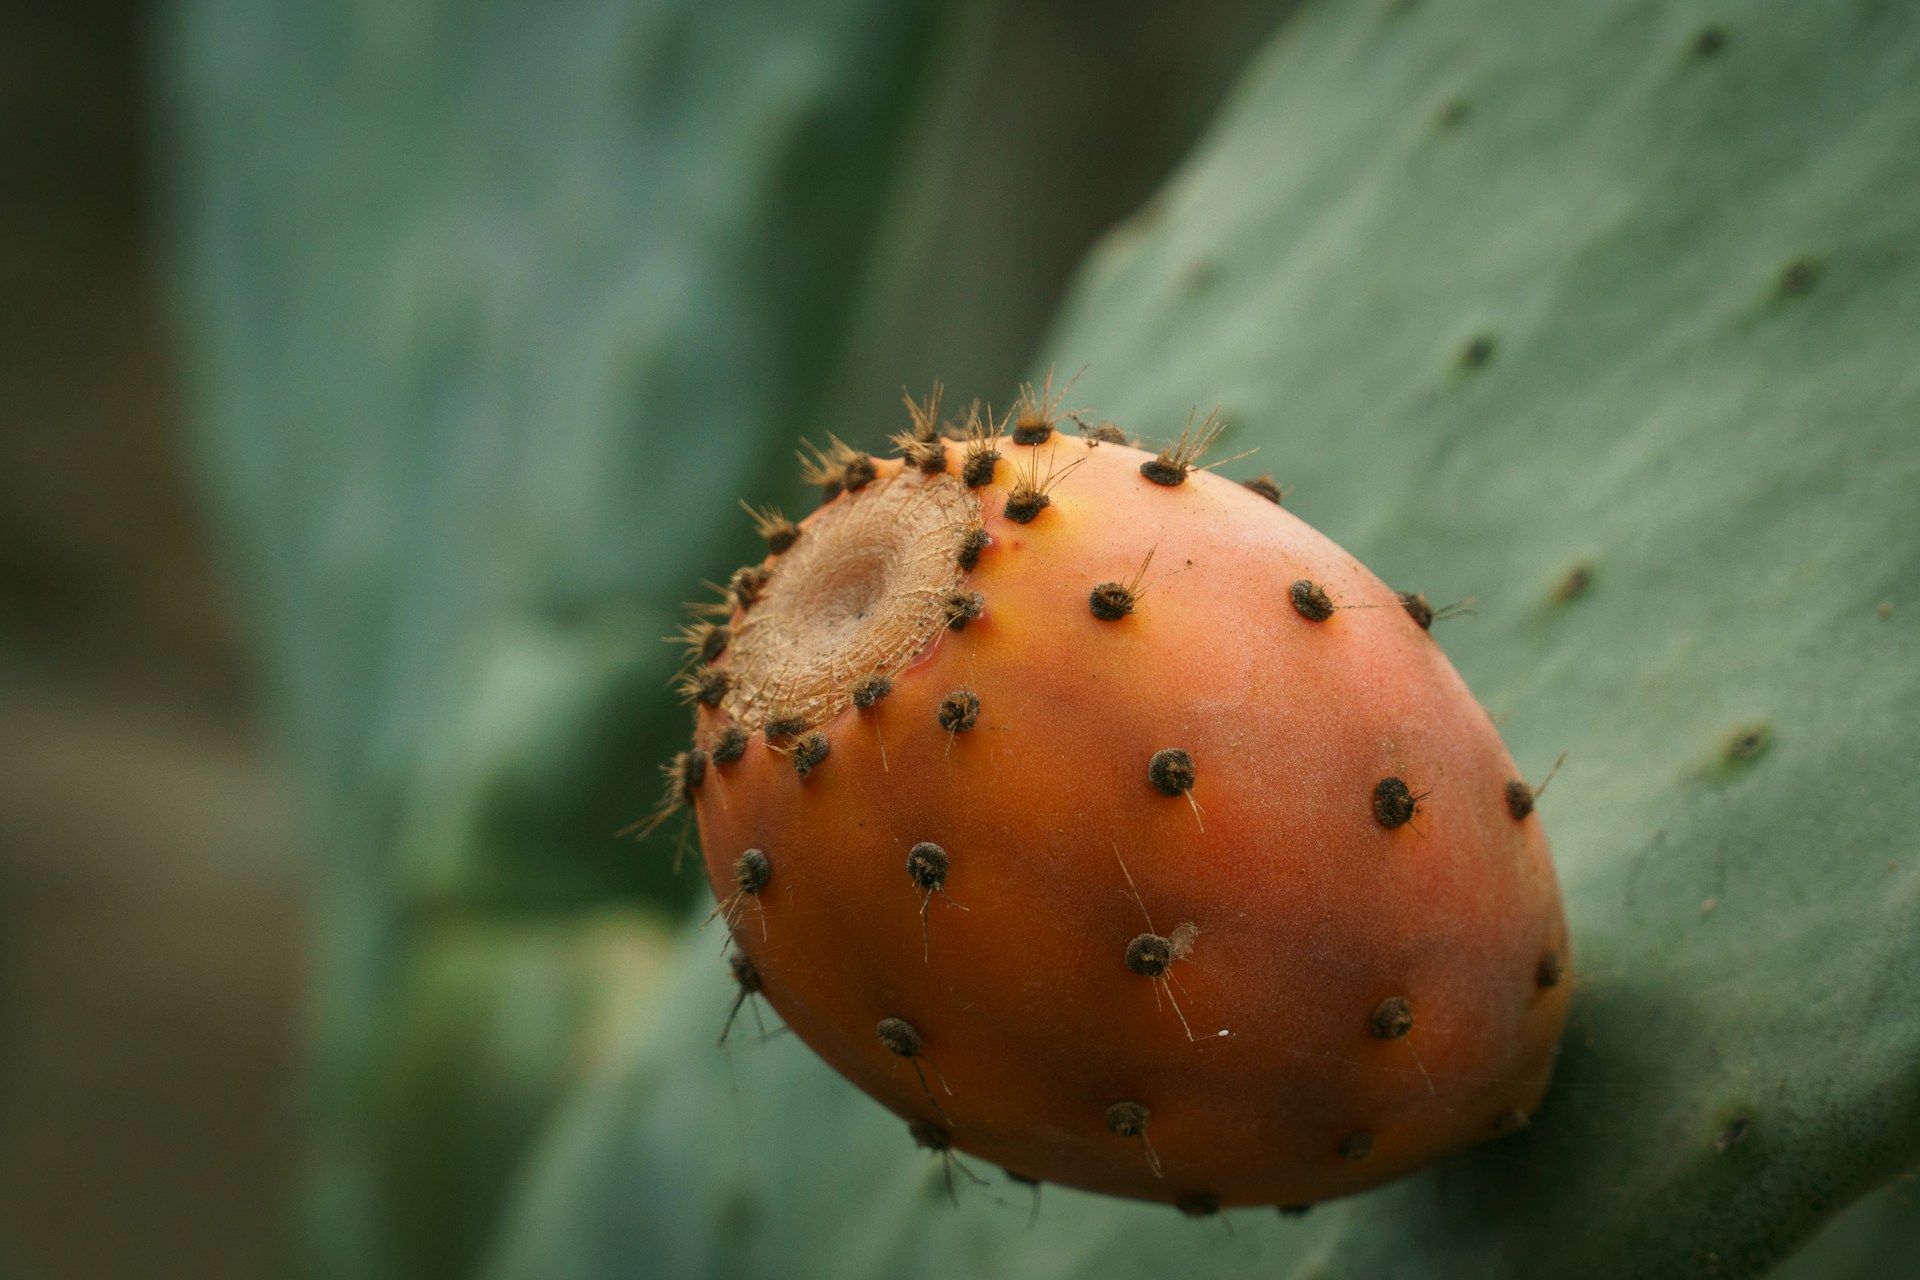 A close up of a pitaya fruit